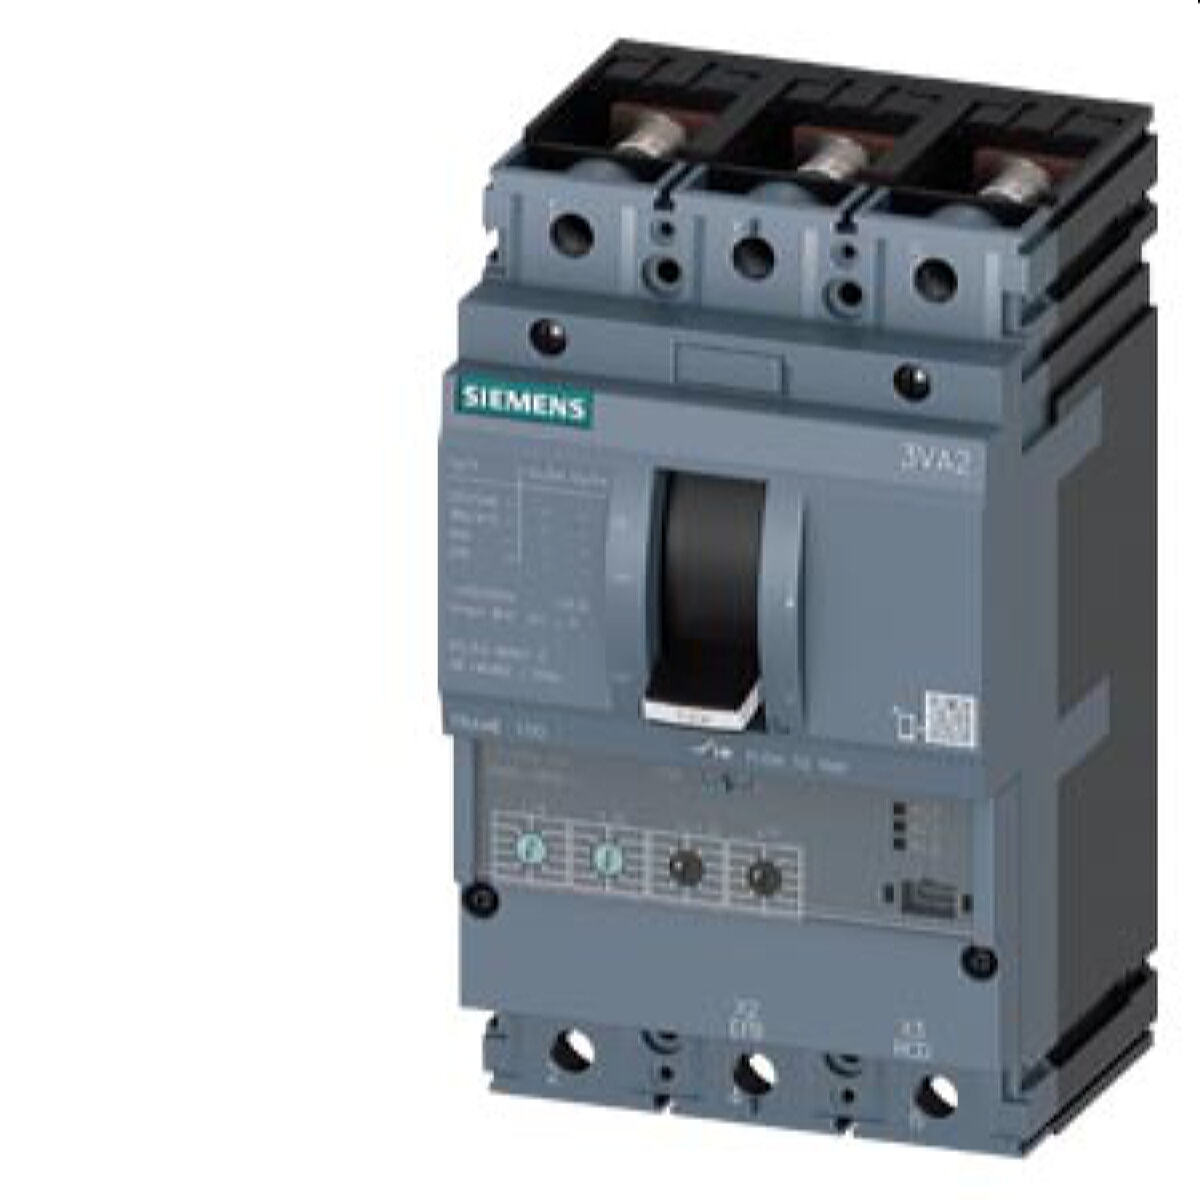 Siemens Leistungsschalter 3VA2 100 150kA LSI40-100A 3VA2010-8HN32-0AA0